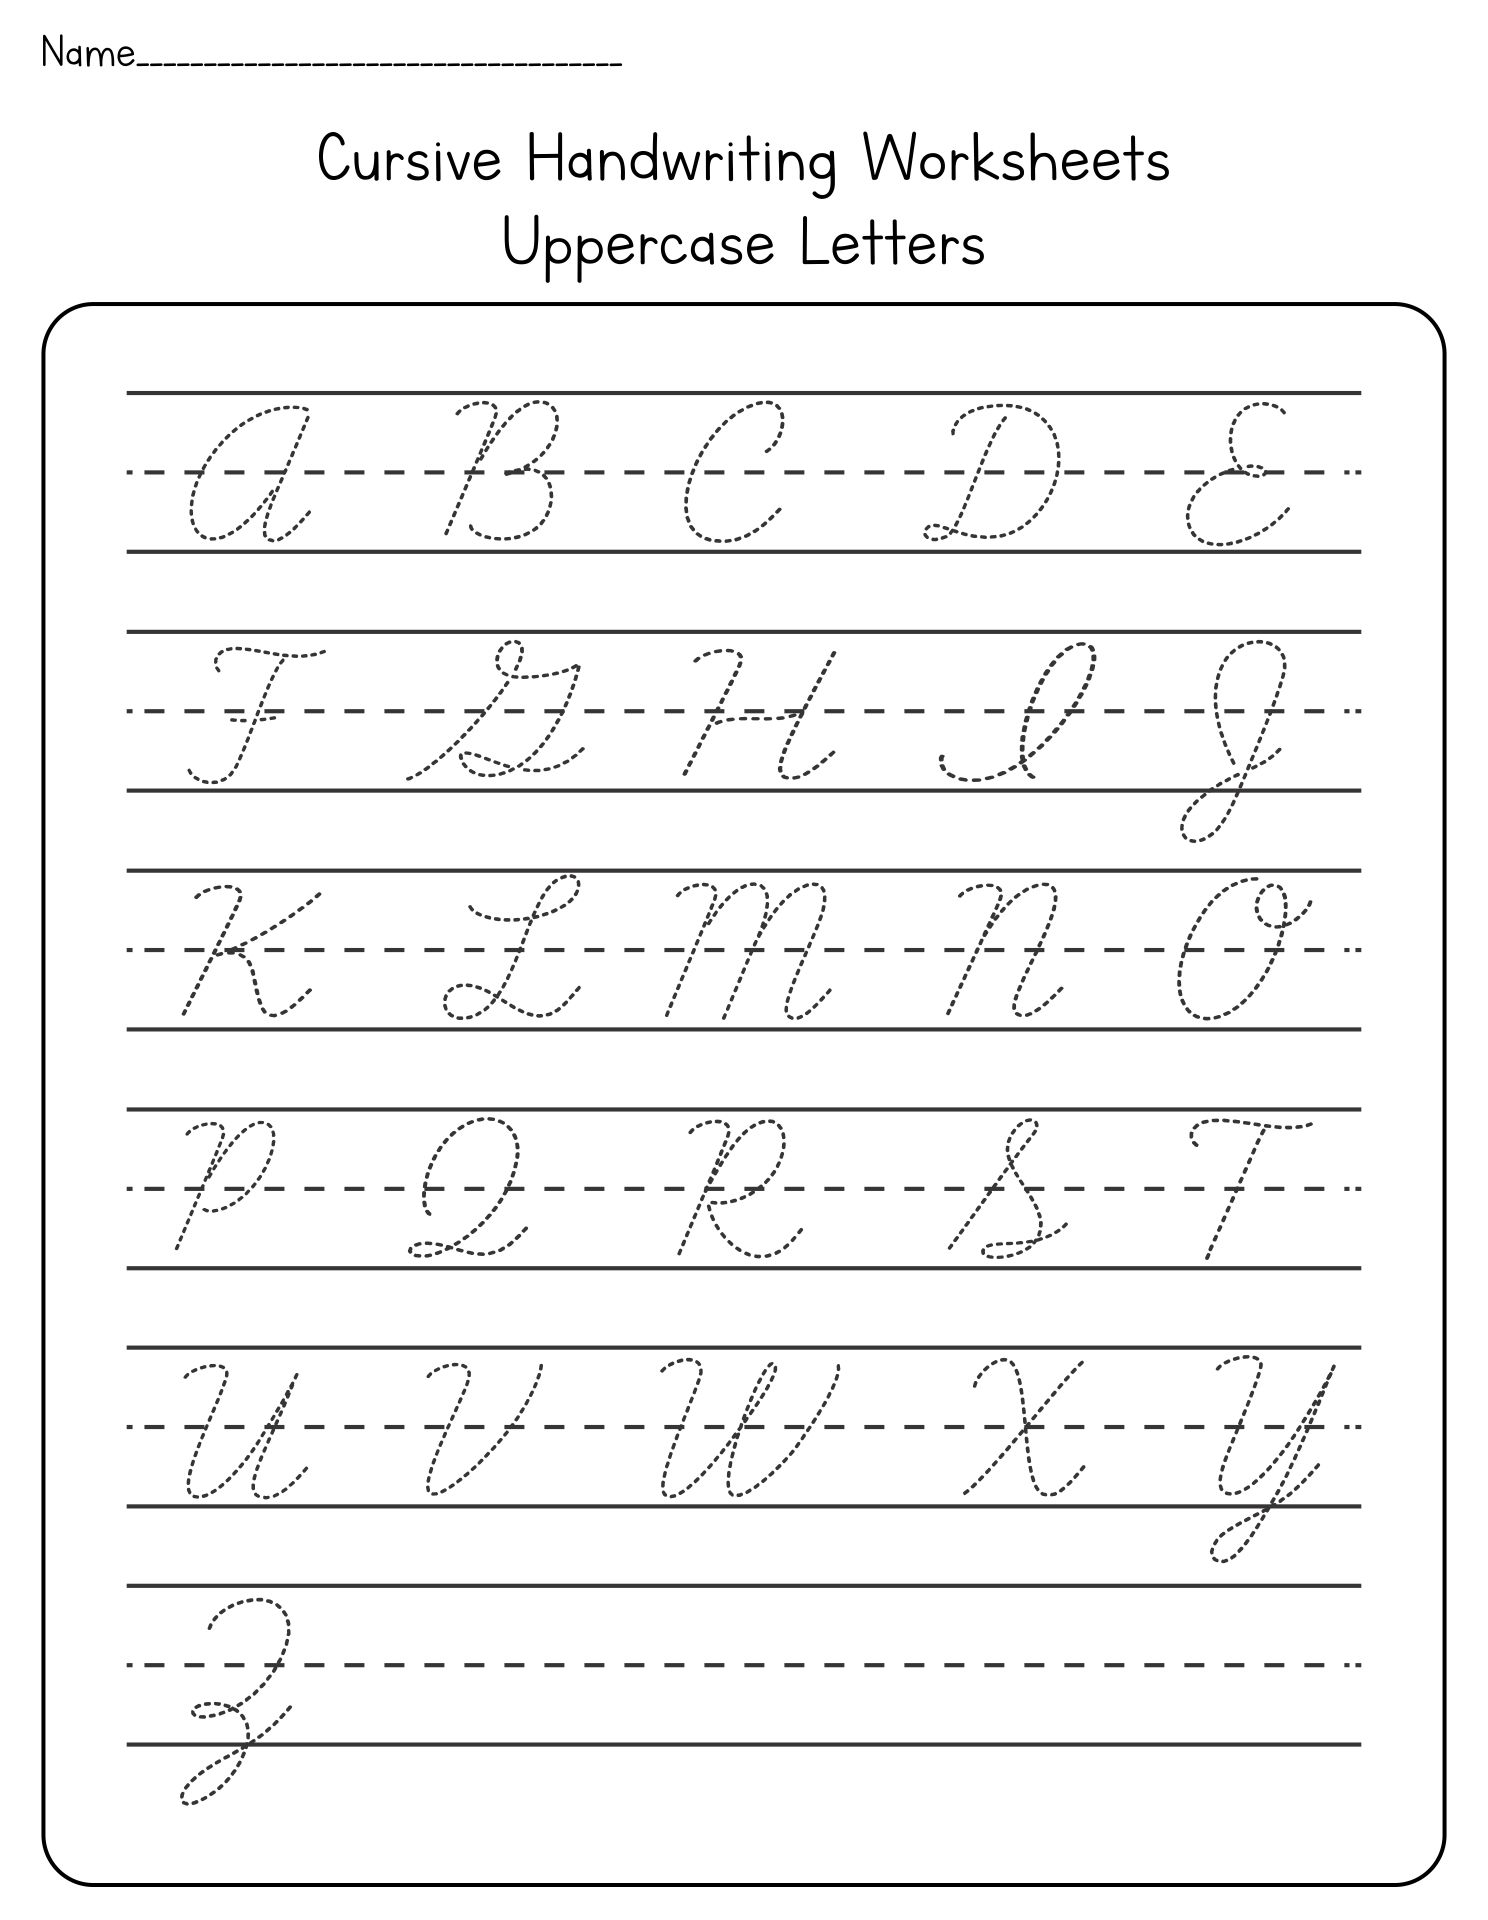 cursive-alphabet-images-to-print-alphabetworksheetsfreecom-cursive